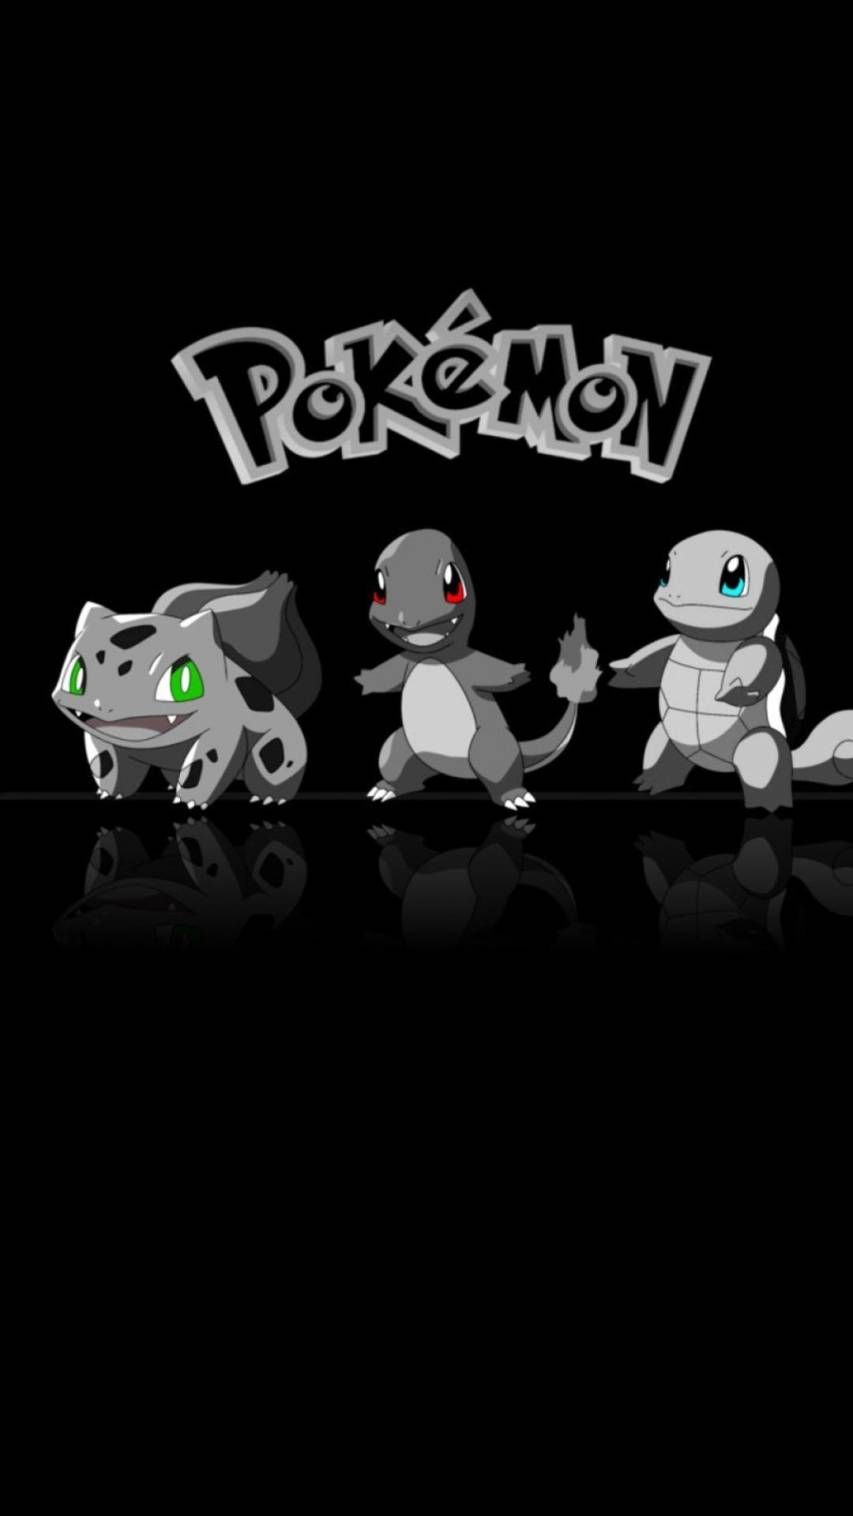  Pokémon Hintergrundbild 853x1516. Cute Pokemon Phone Wallpaper and Background Picture